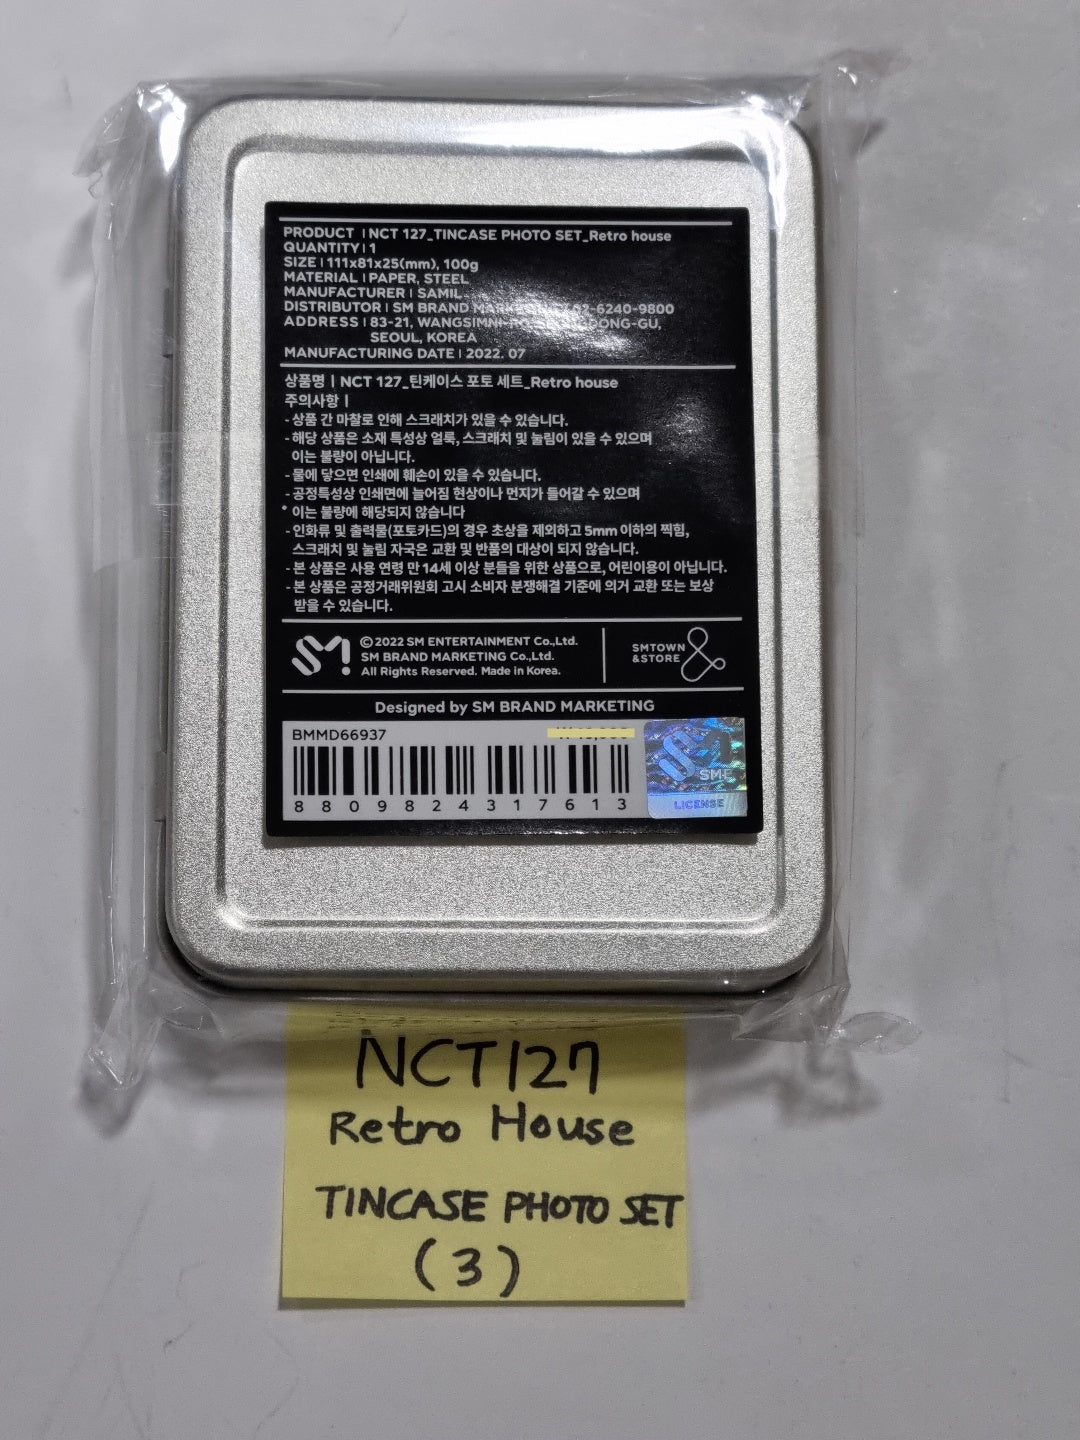 NCT 127 - RETRO HOUSE MD [Pin Button, Tincase Photo set]